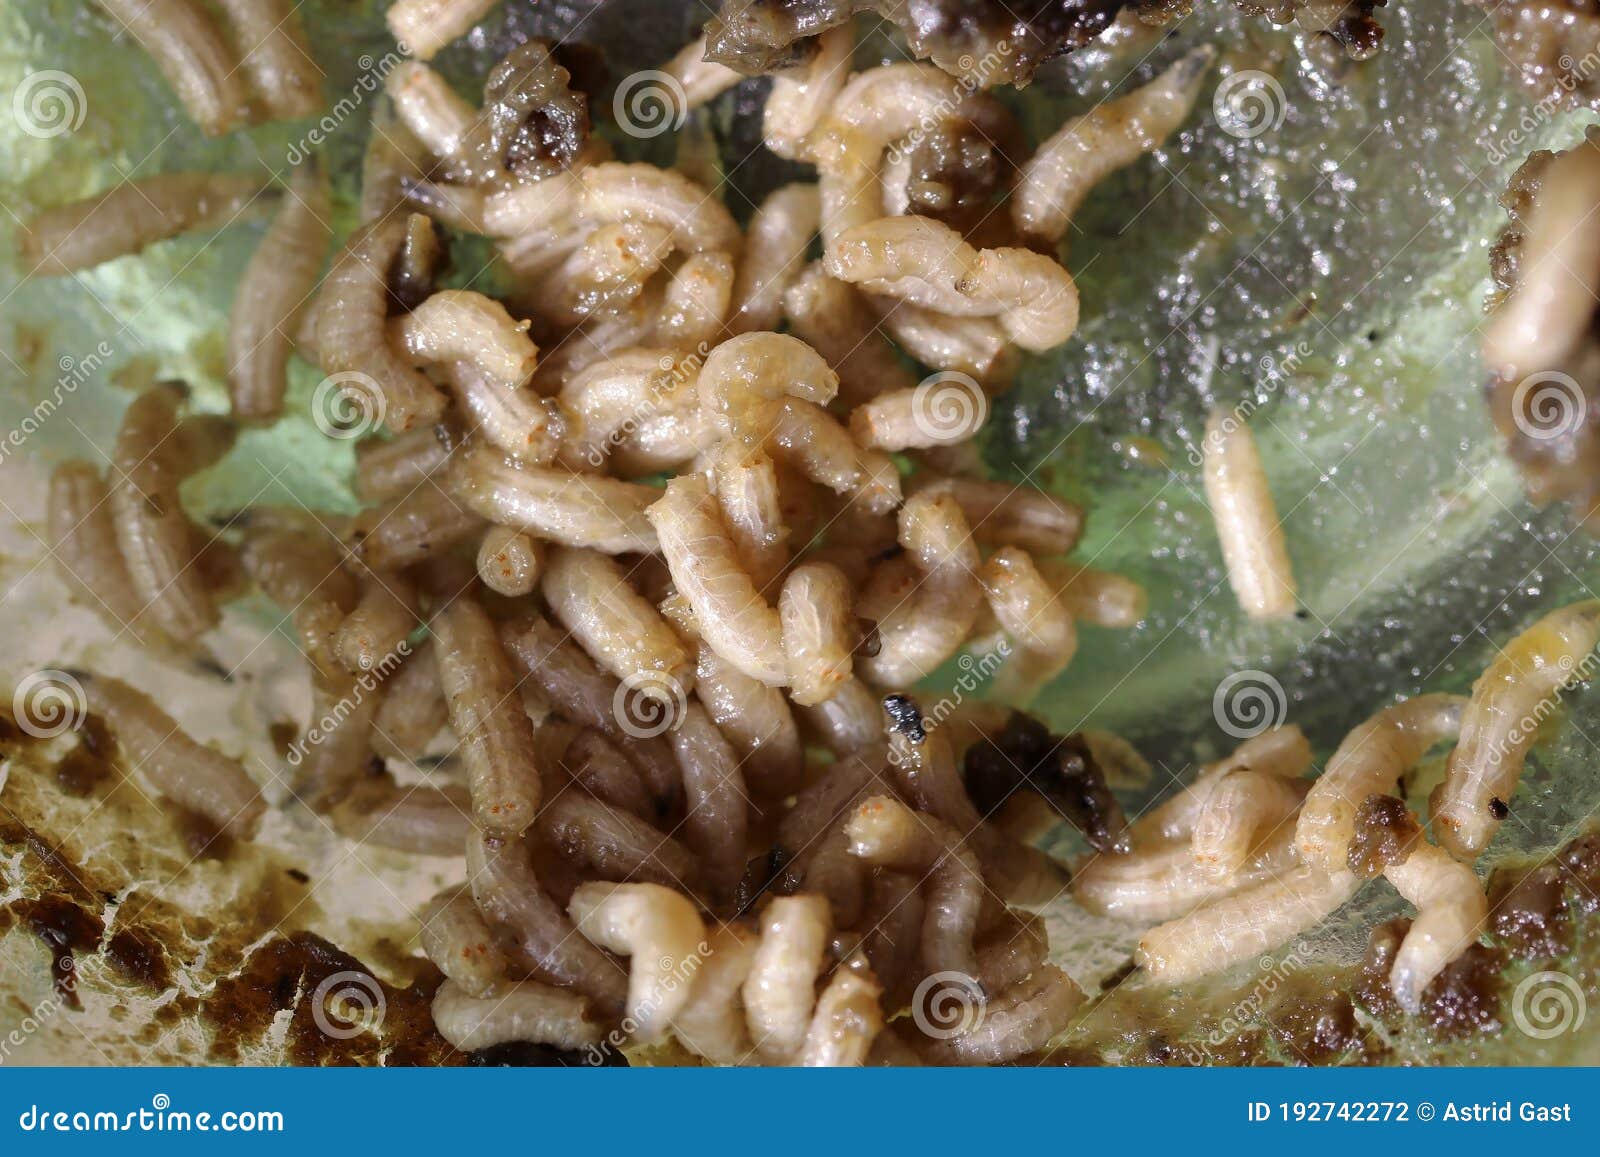 Fly maggots on food stock photo. Image of eating, brachycera